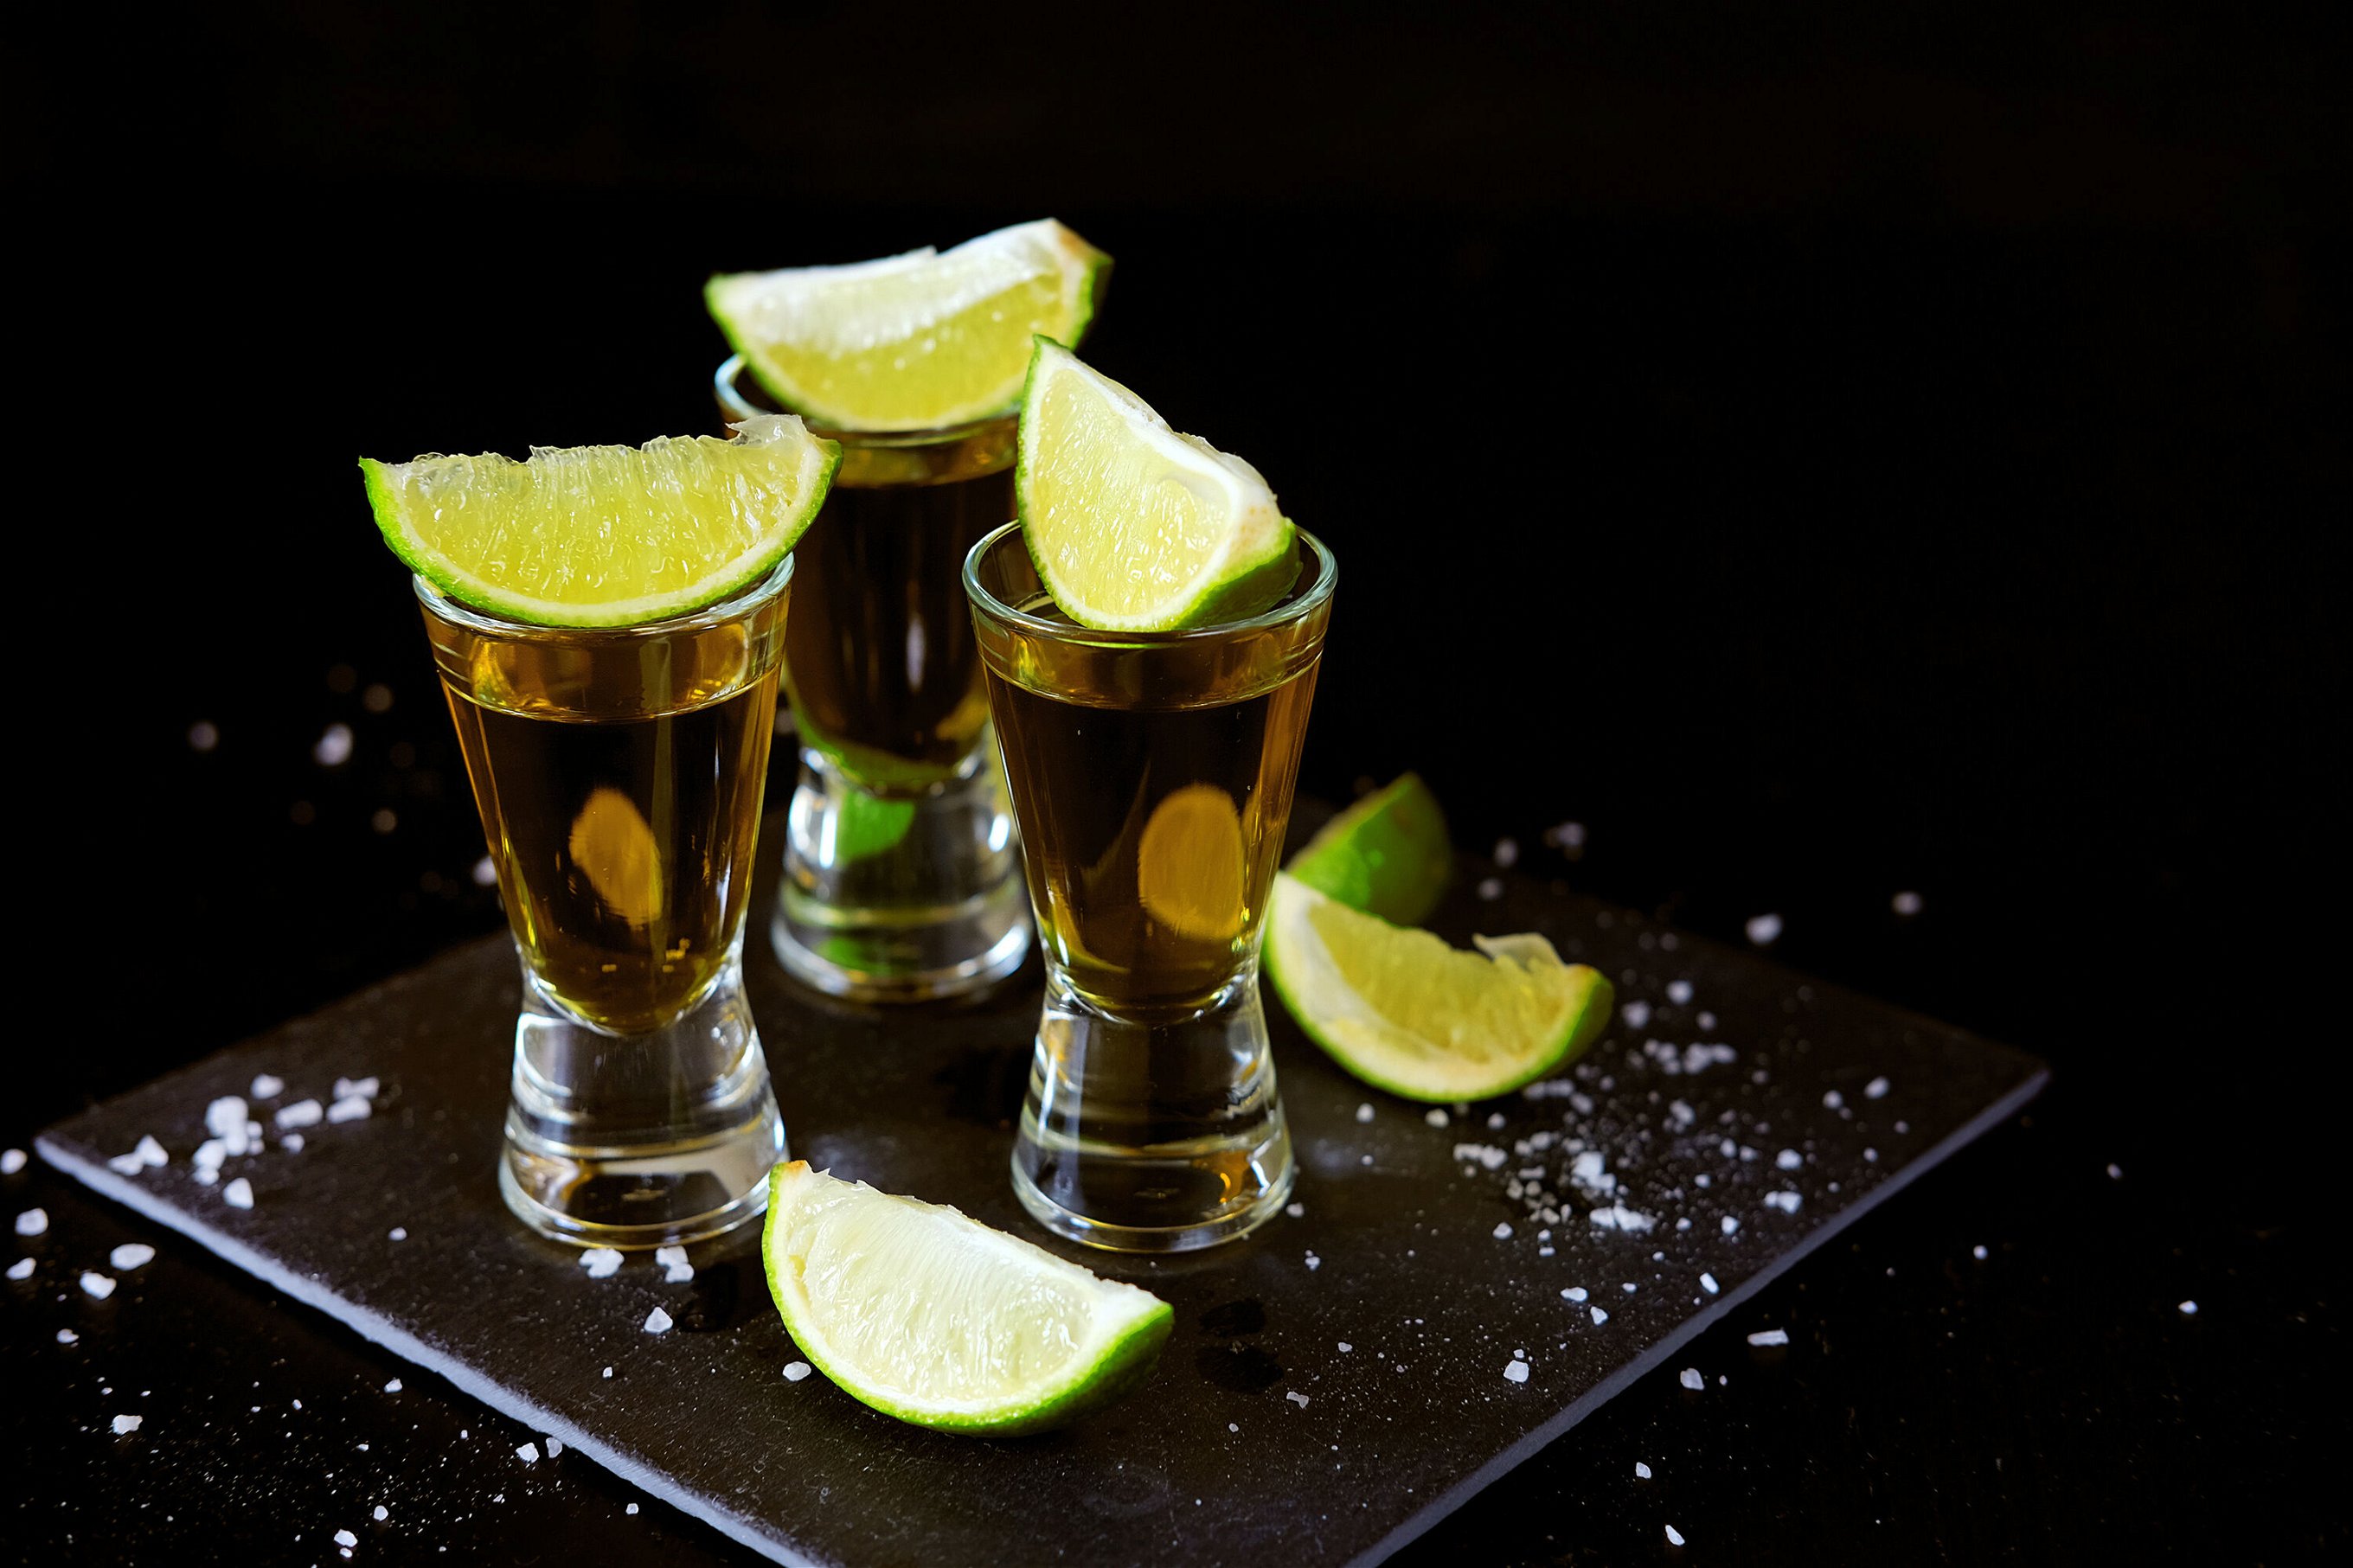 Patrón Reposado Tequila Patrón Spirits Company, S.A. de C.V. - Falstaff ...